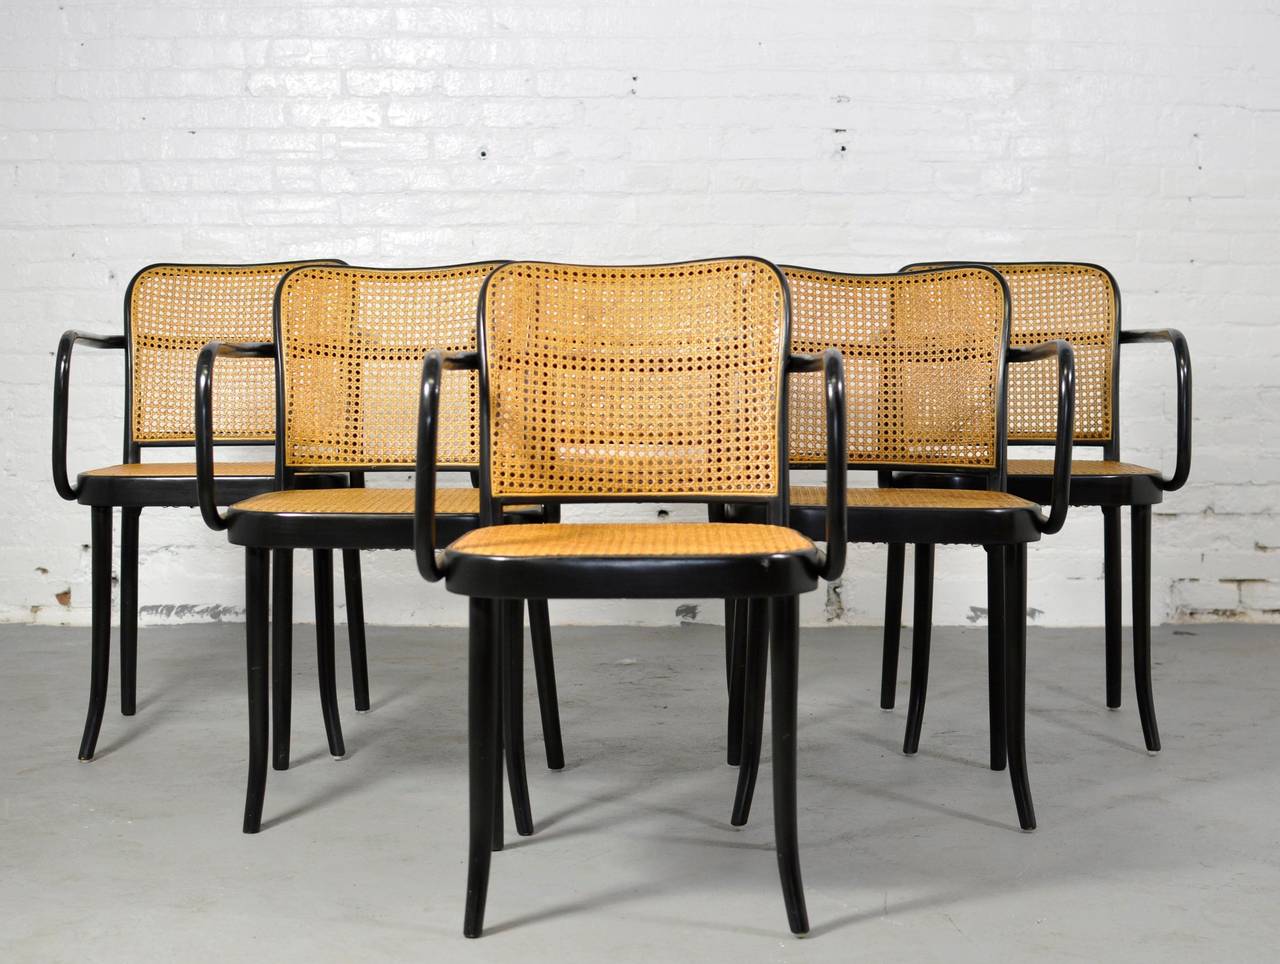 Set of 6 Prague 811 Chairs designed by Josef Hoffman for Stendig.